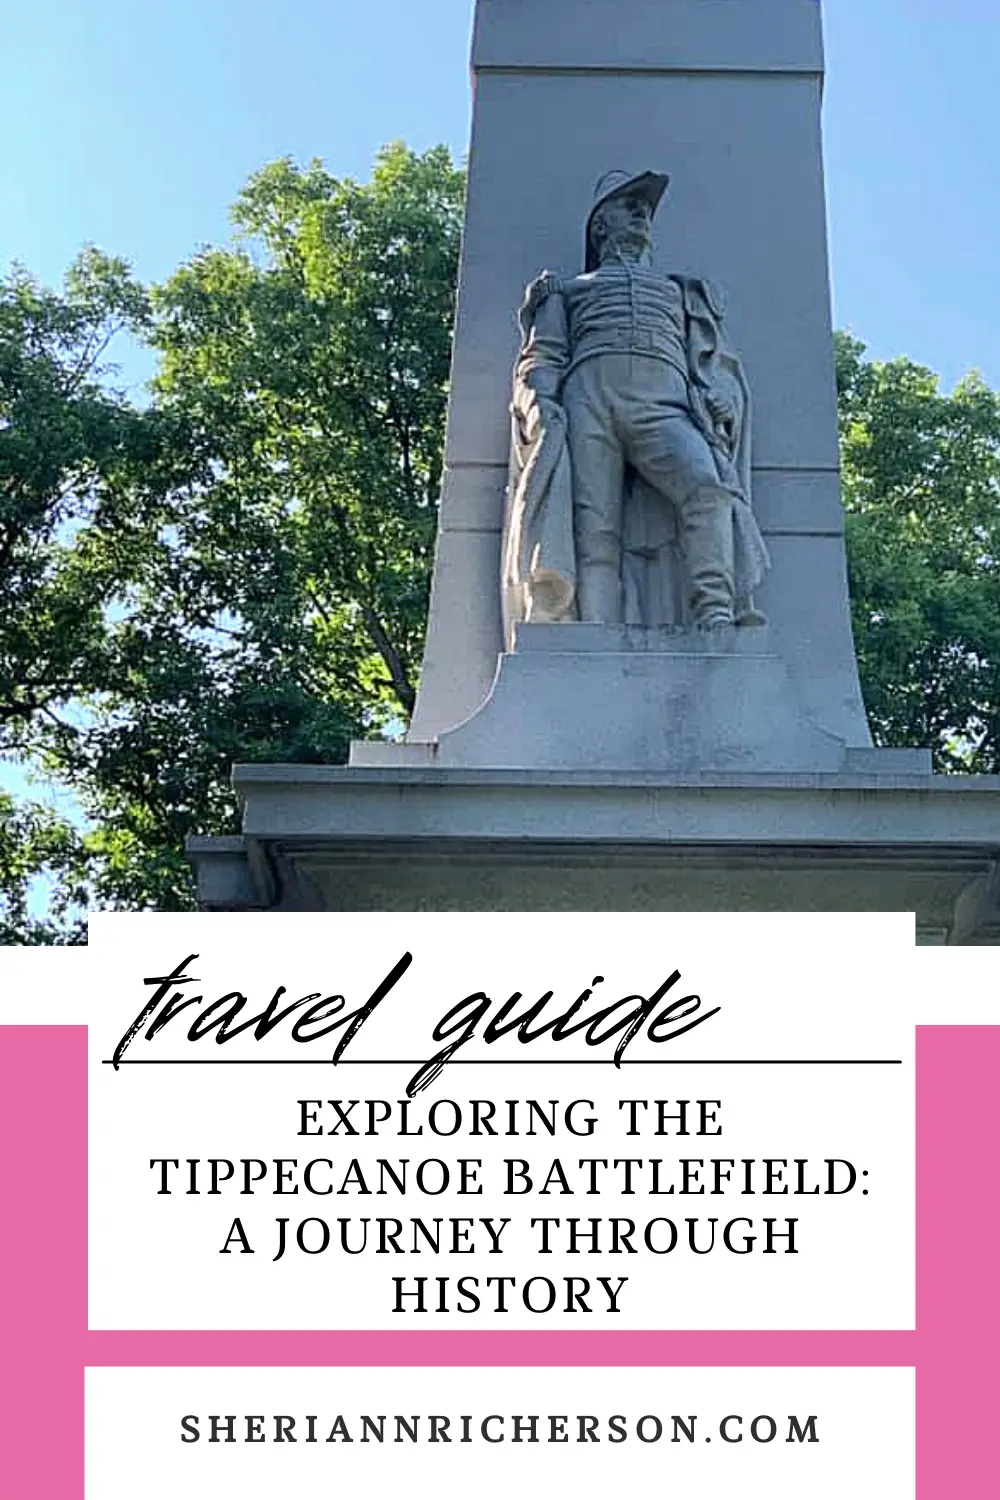 Memorial at the Tippecanoe Battle site.